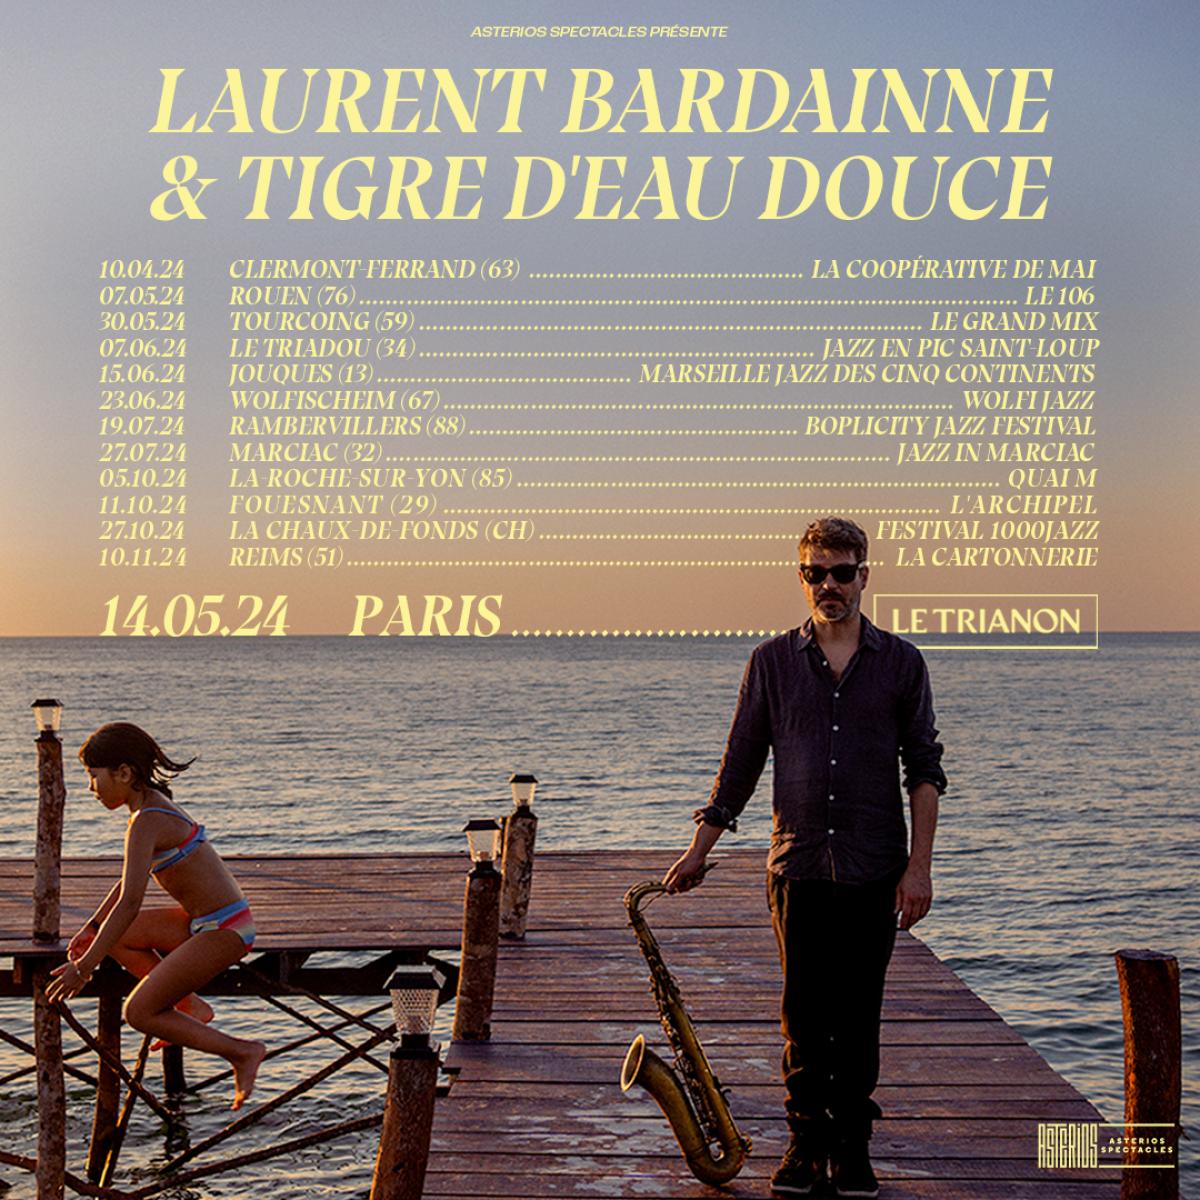 Billets Laurent Bardainne - Tigre D'eau Douce (L'Astrada - Marciac)